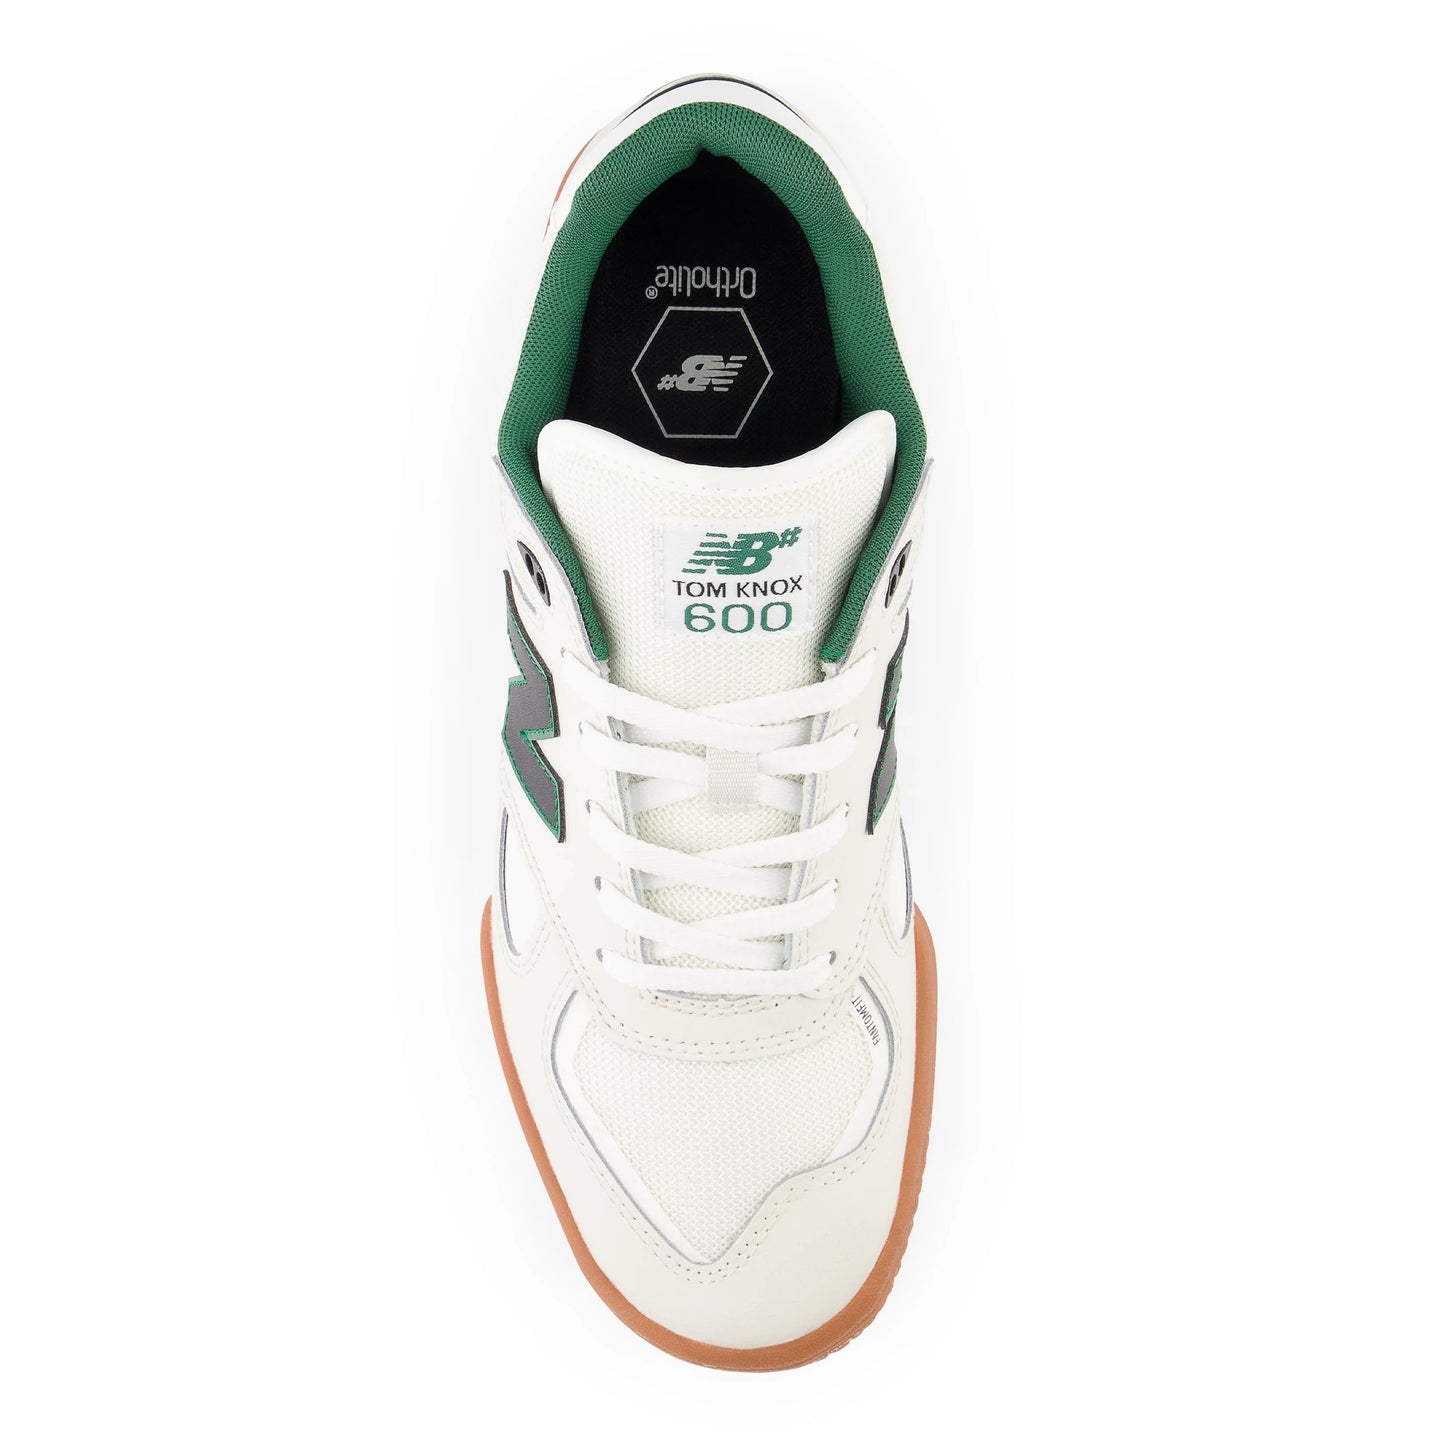 New Balance Numeric 'Tom Knox 600' Skate Shoes (White / Green)